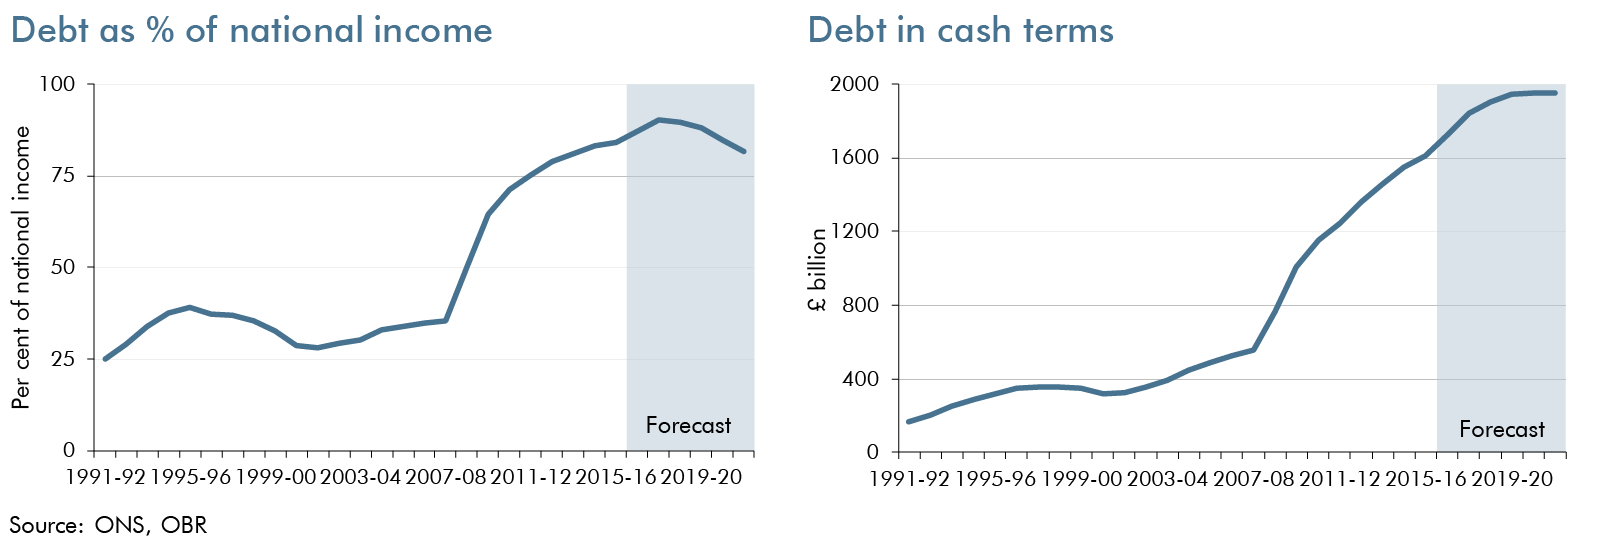 debt measures line charts